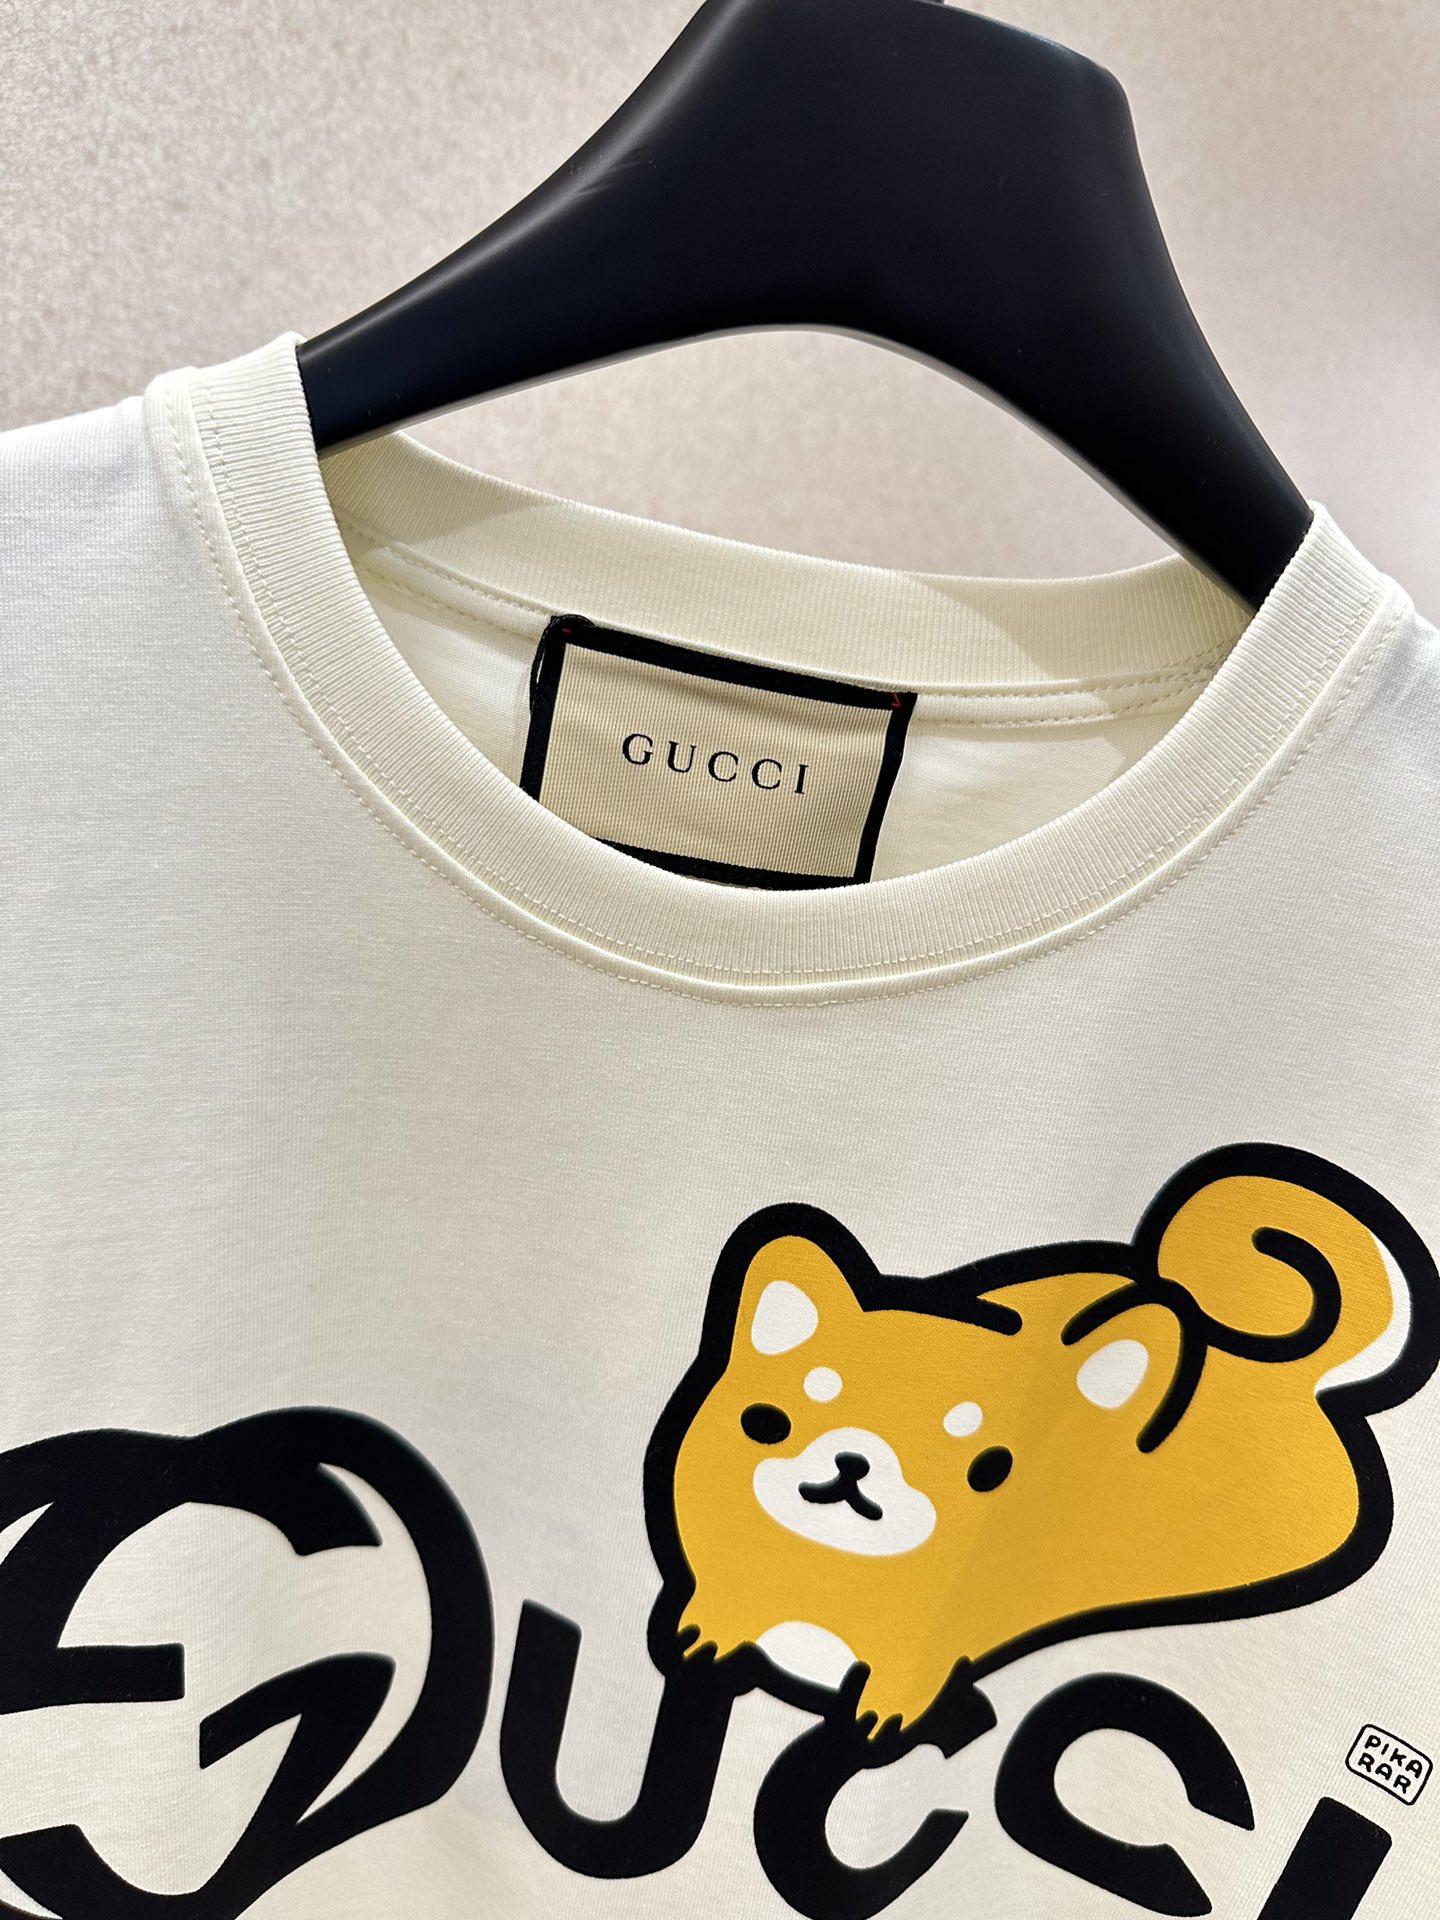 gucci-animal-print-cotton-t-shirt-7220_16845021113-1000